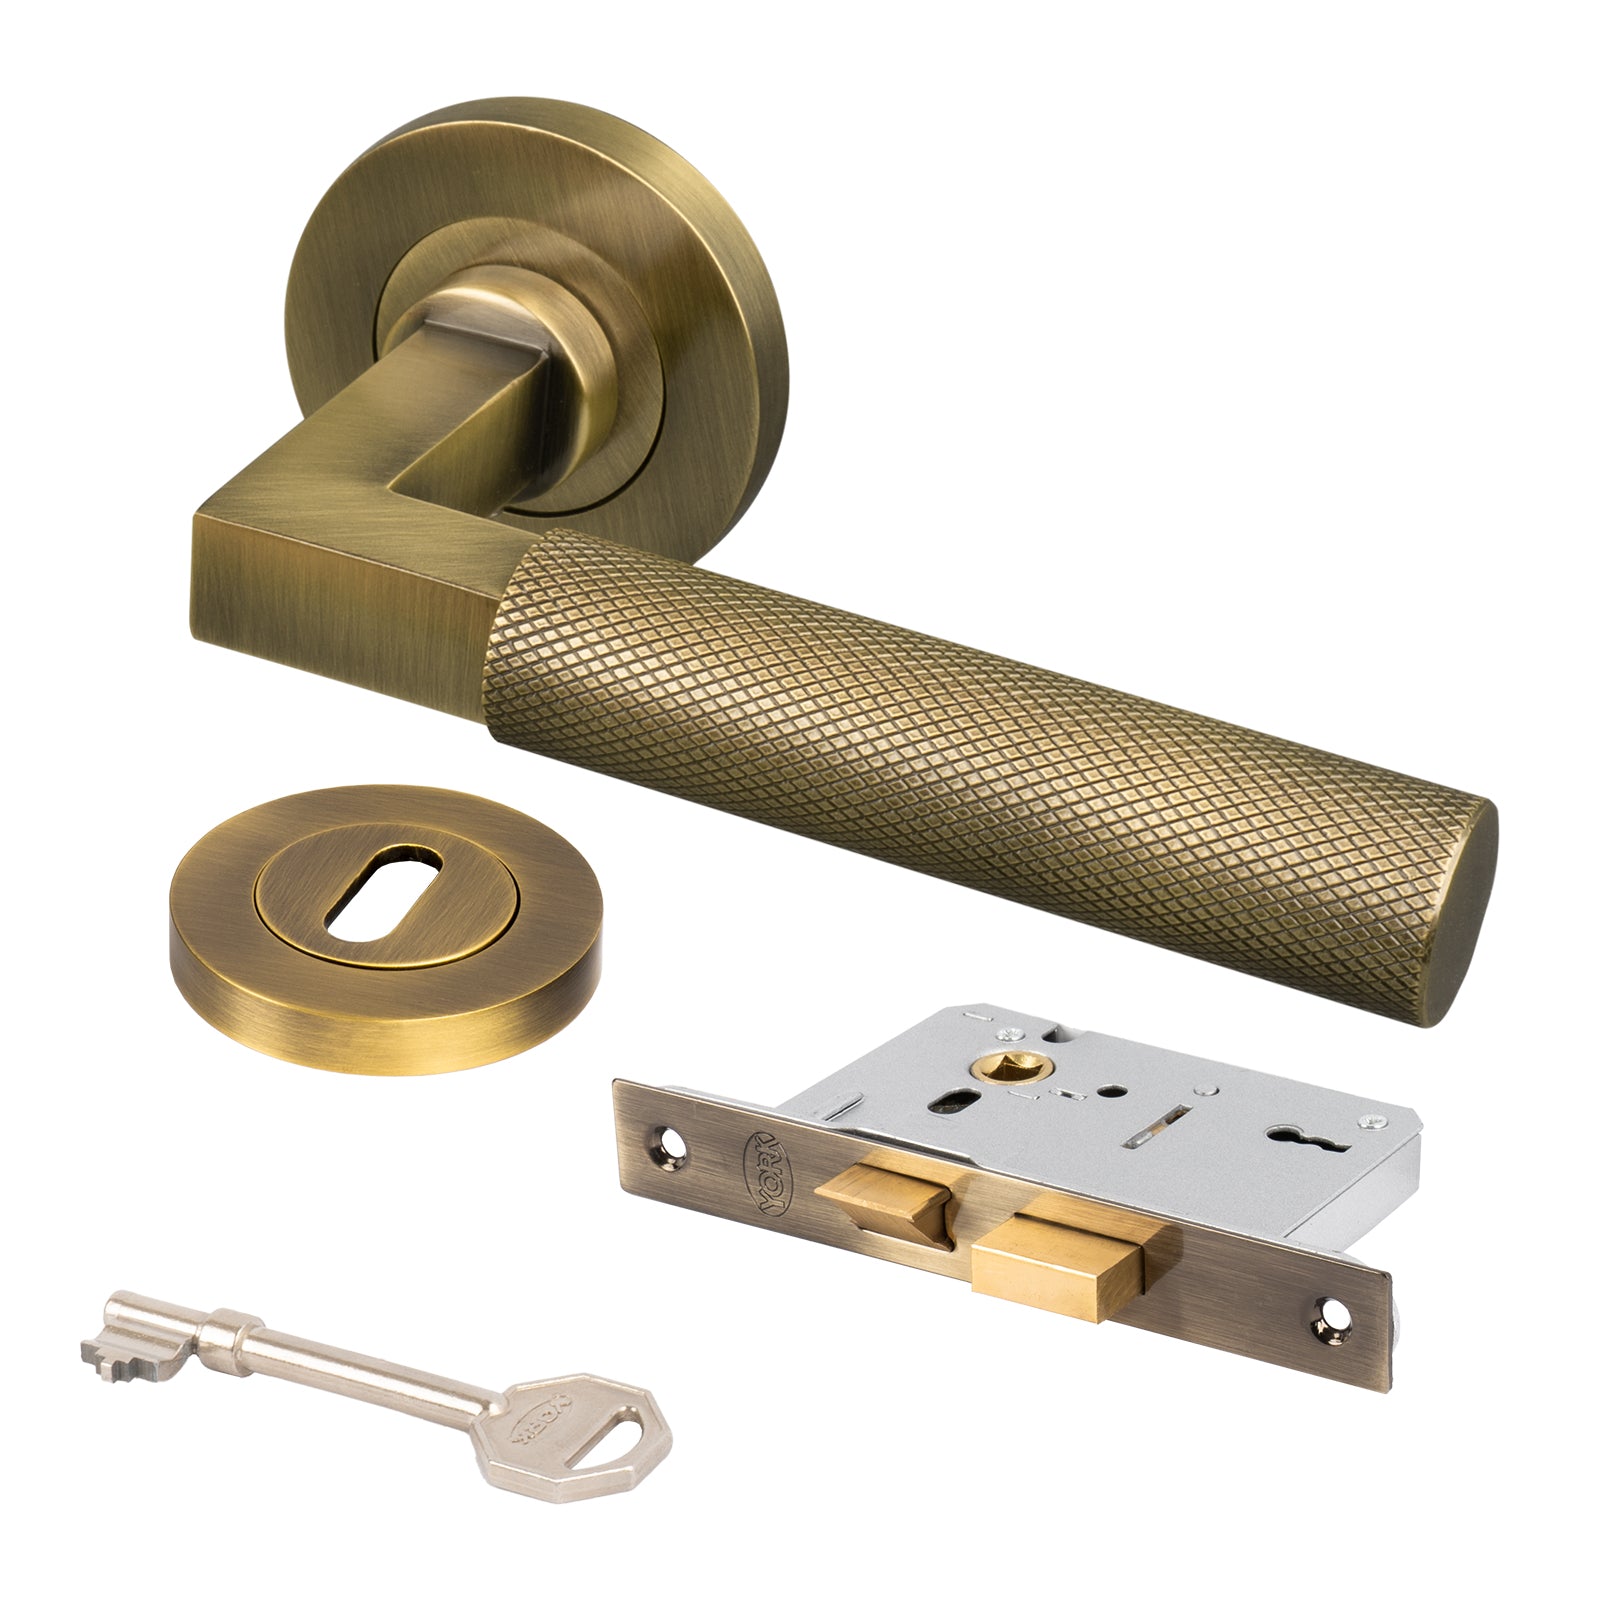 aged brass Signac knurled door handle 3 lever lock set